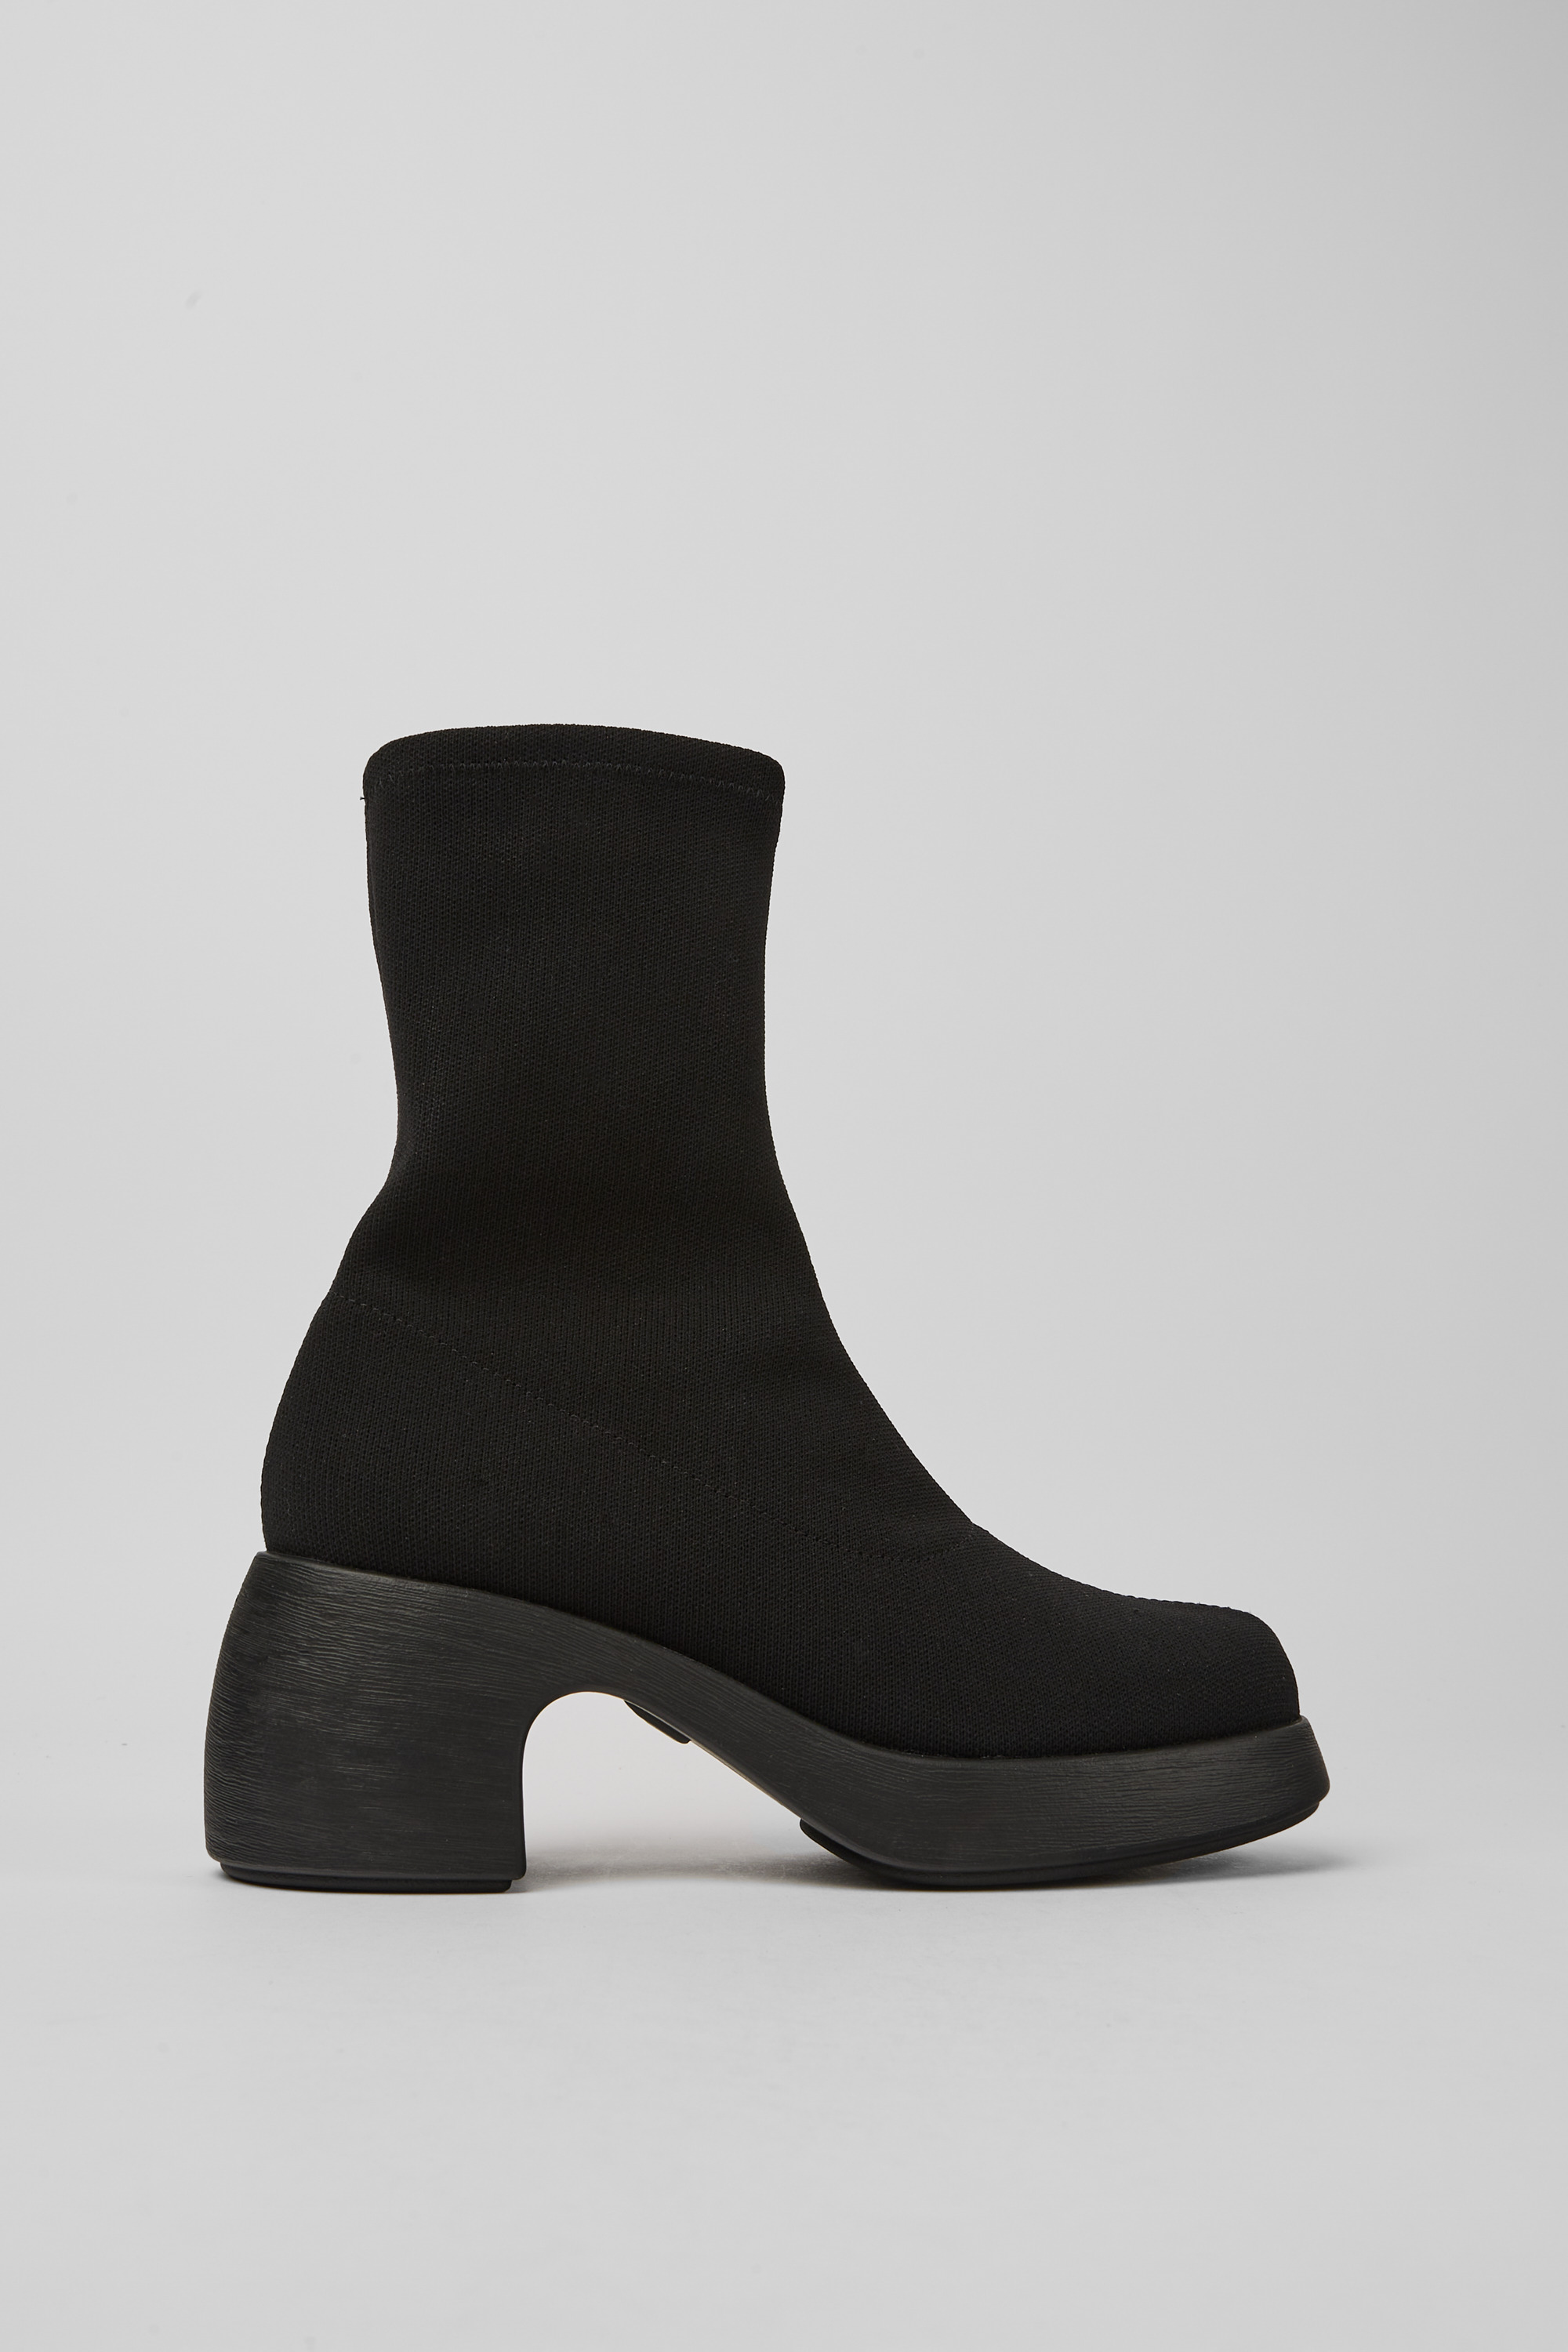 Være generøsitet nakke Thelma Black Boots for Women - Autumn/Winter collection - Camper USA